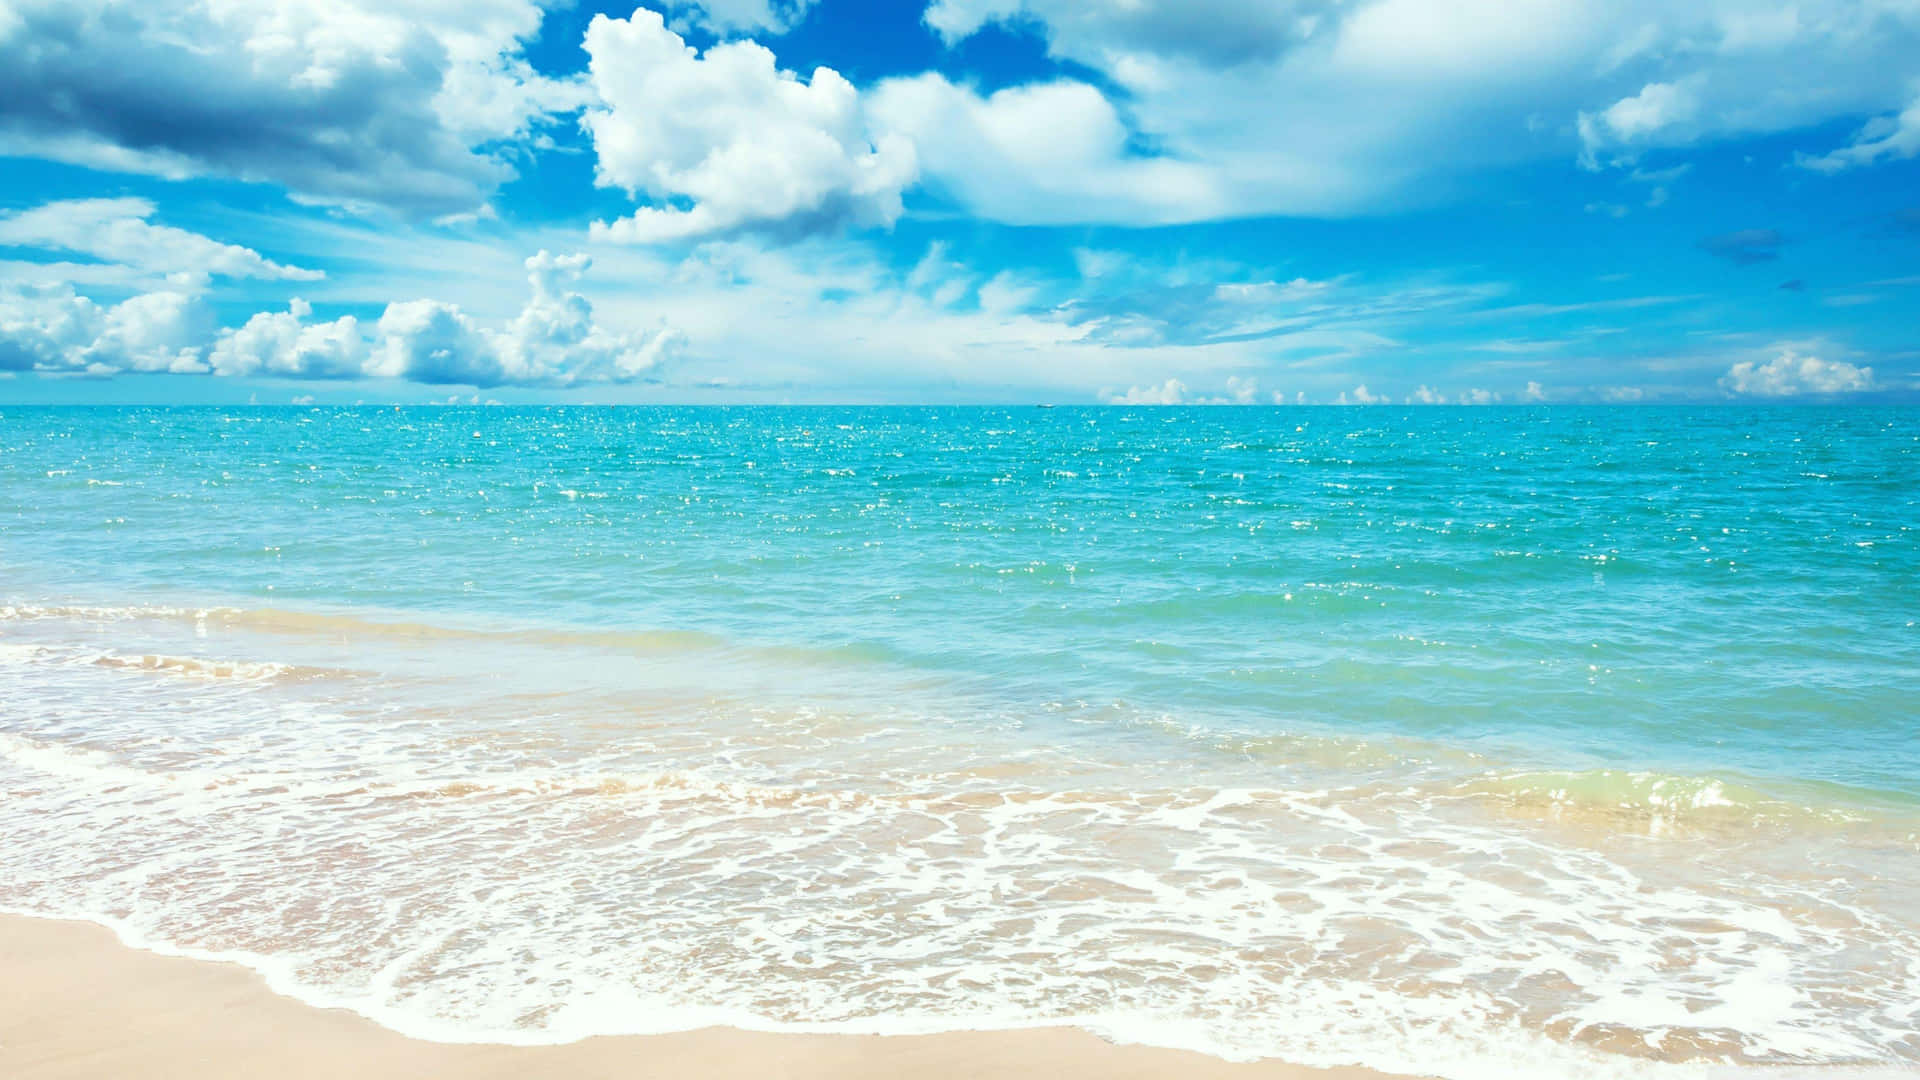 Beautiful Crystal Beach Sunny Day Wallpaper